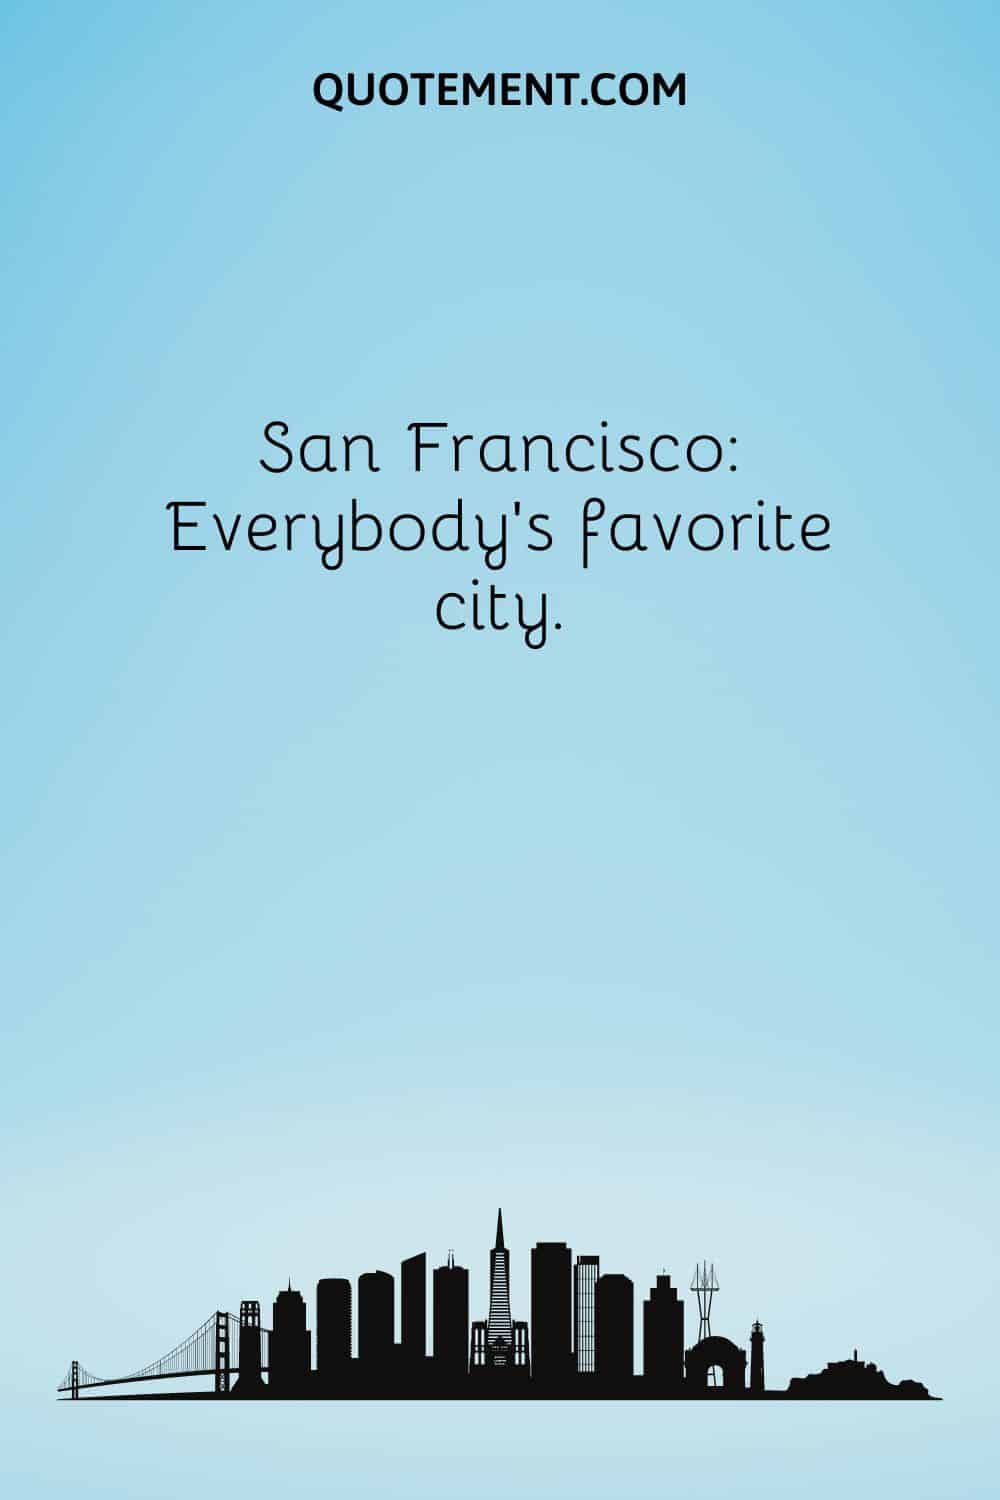 San Francisco Everybody’s favorite city.